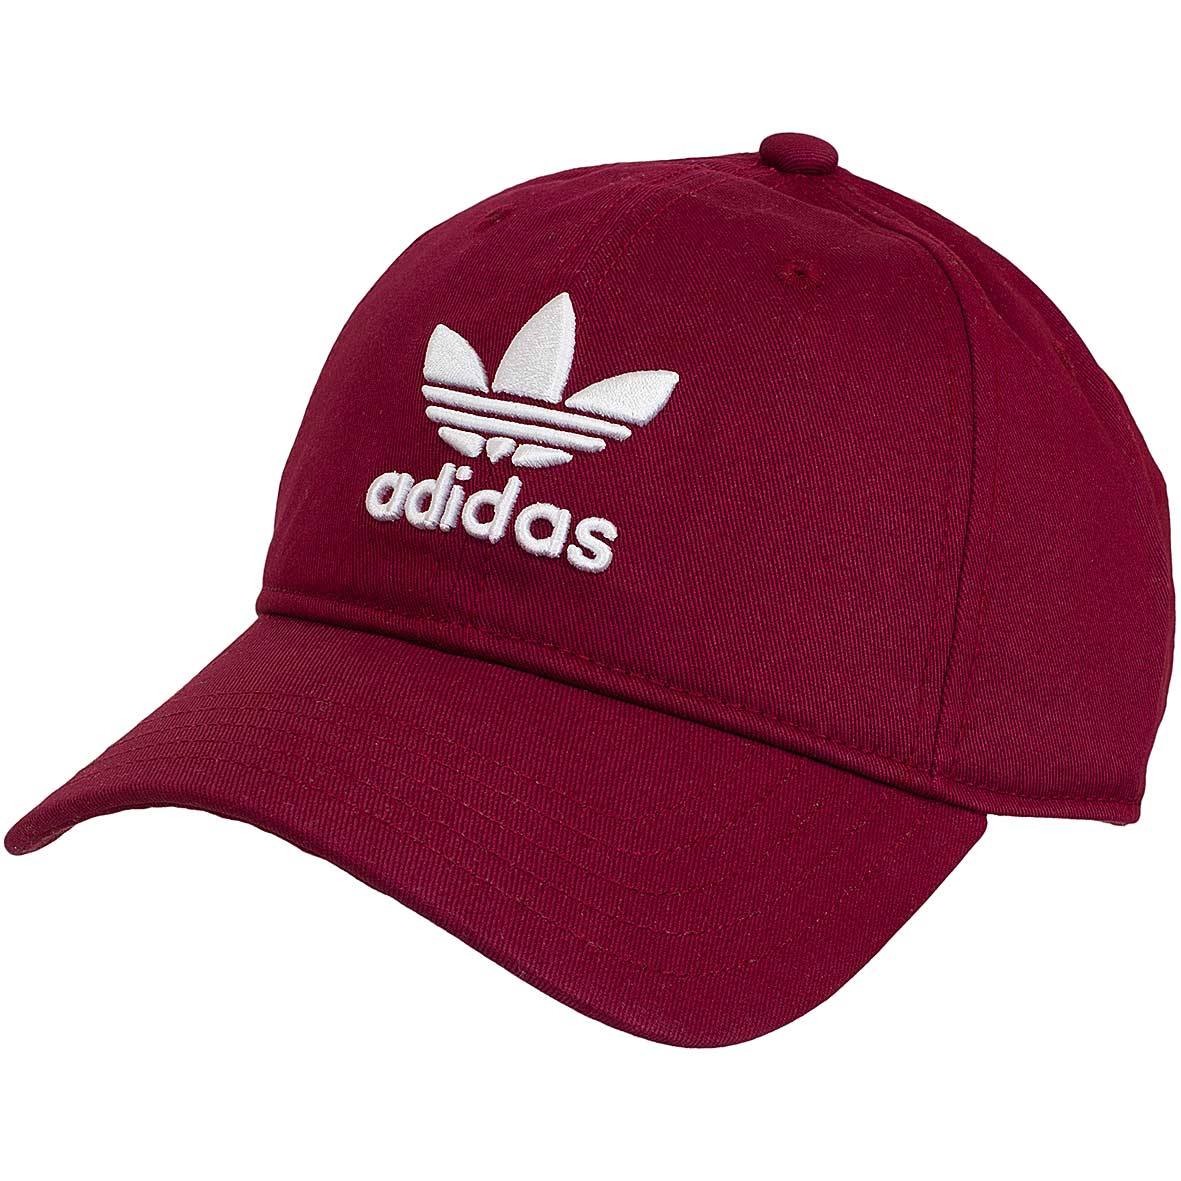 ☆ Adidas Originals Snapback Cap Trefoil weinrot/weiß - hier bestellen!